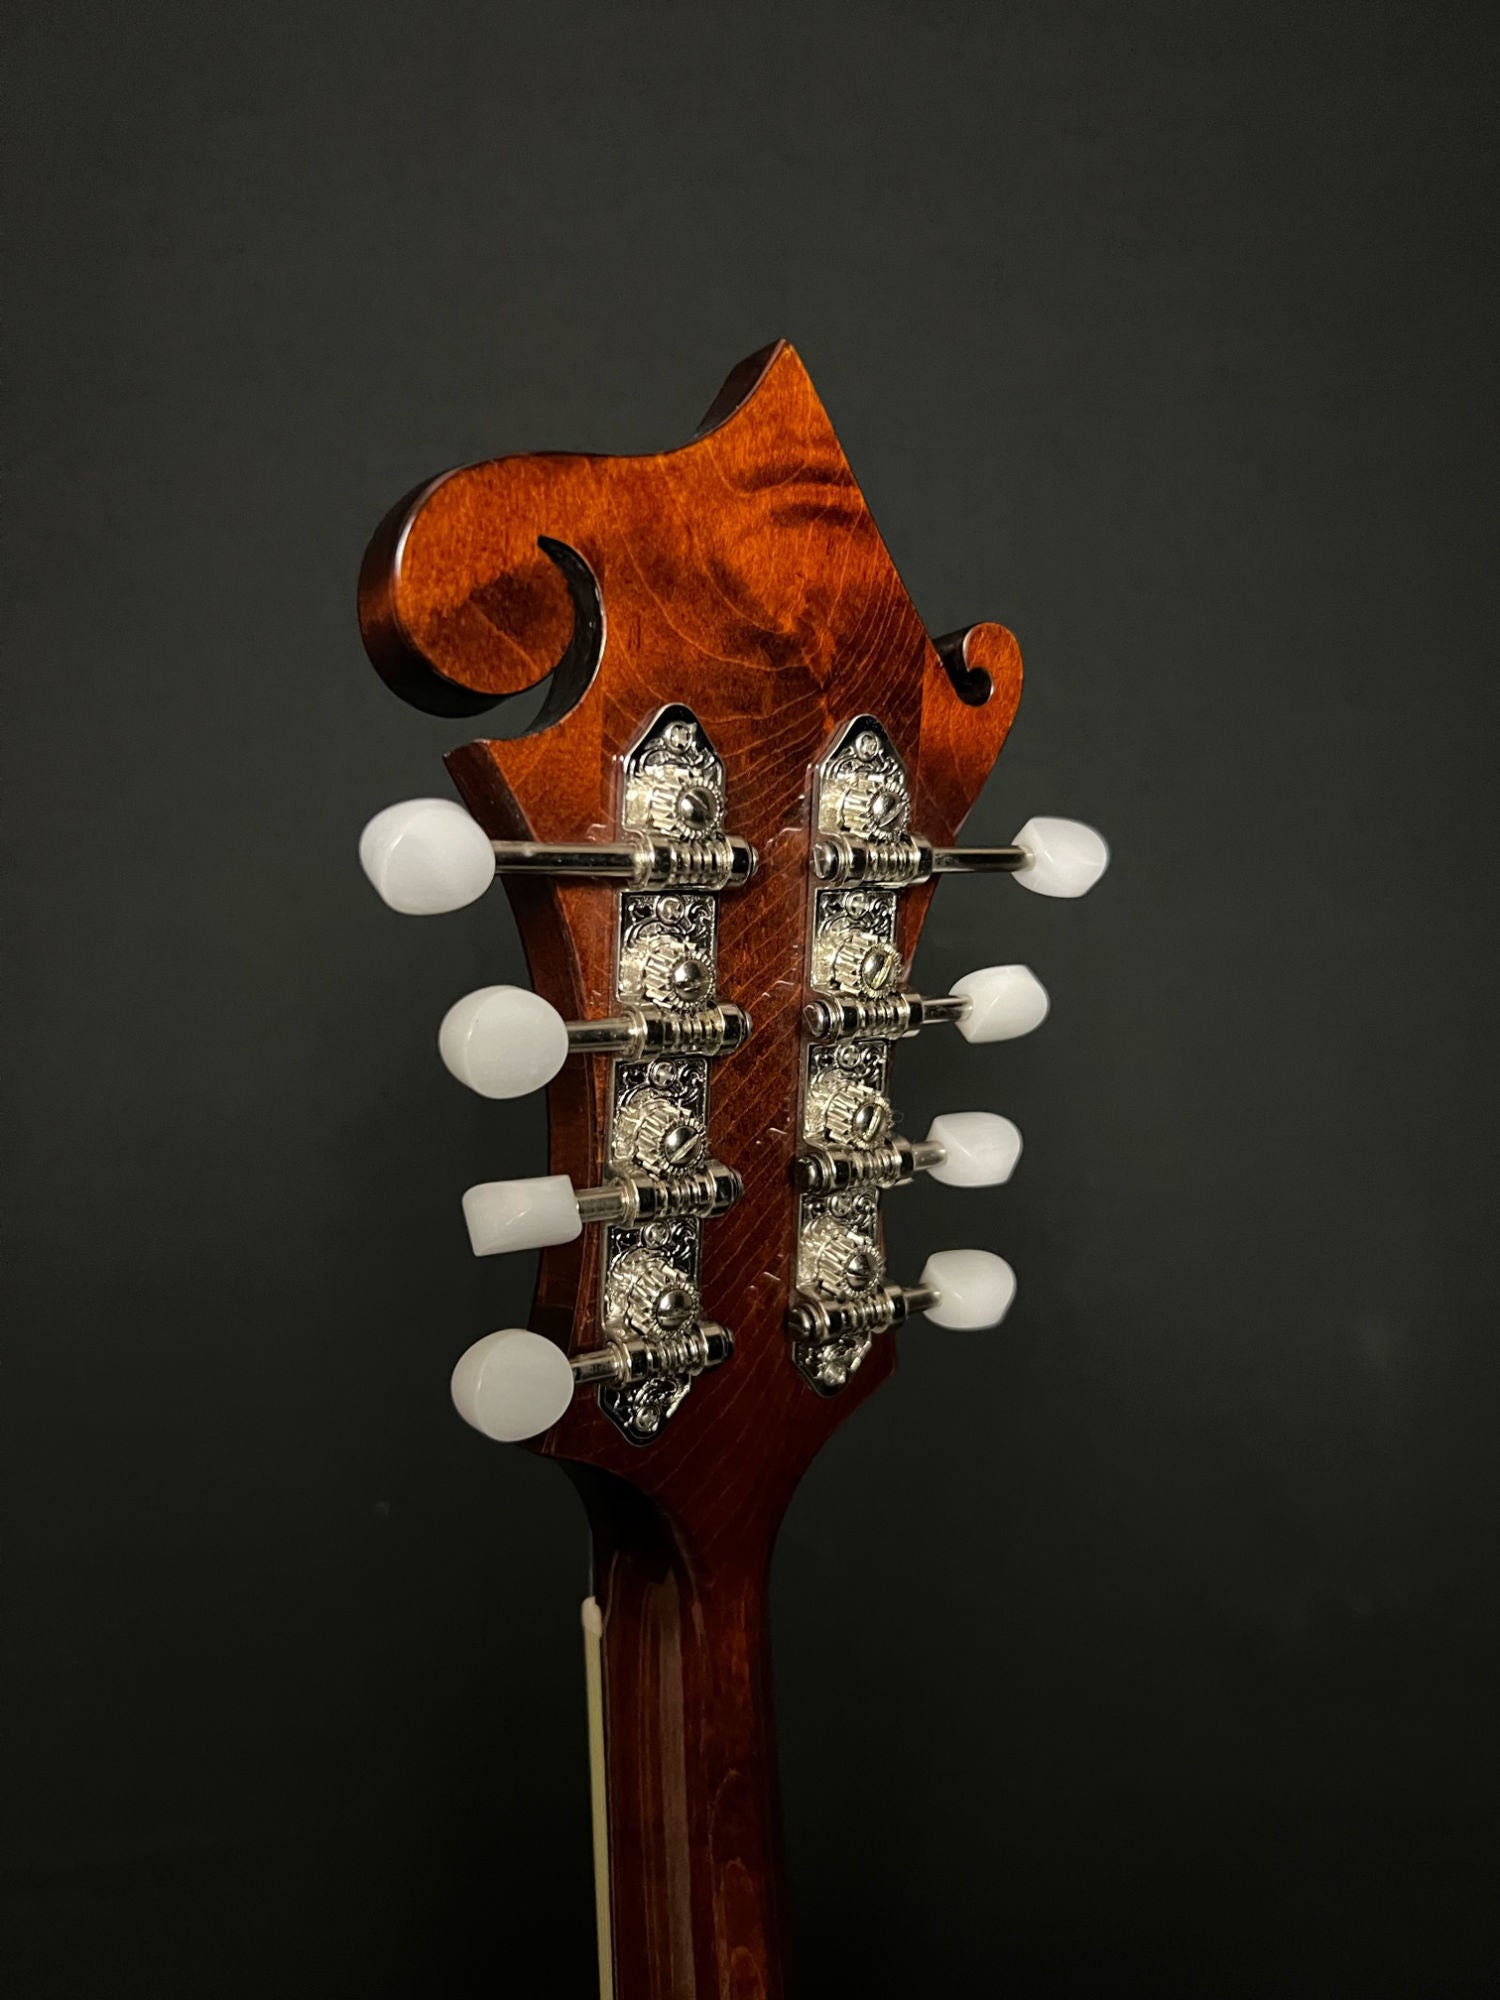 Eastman MD515 F-style mandolin tuners